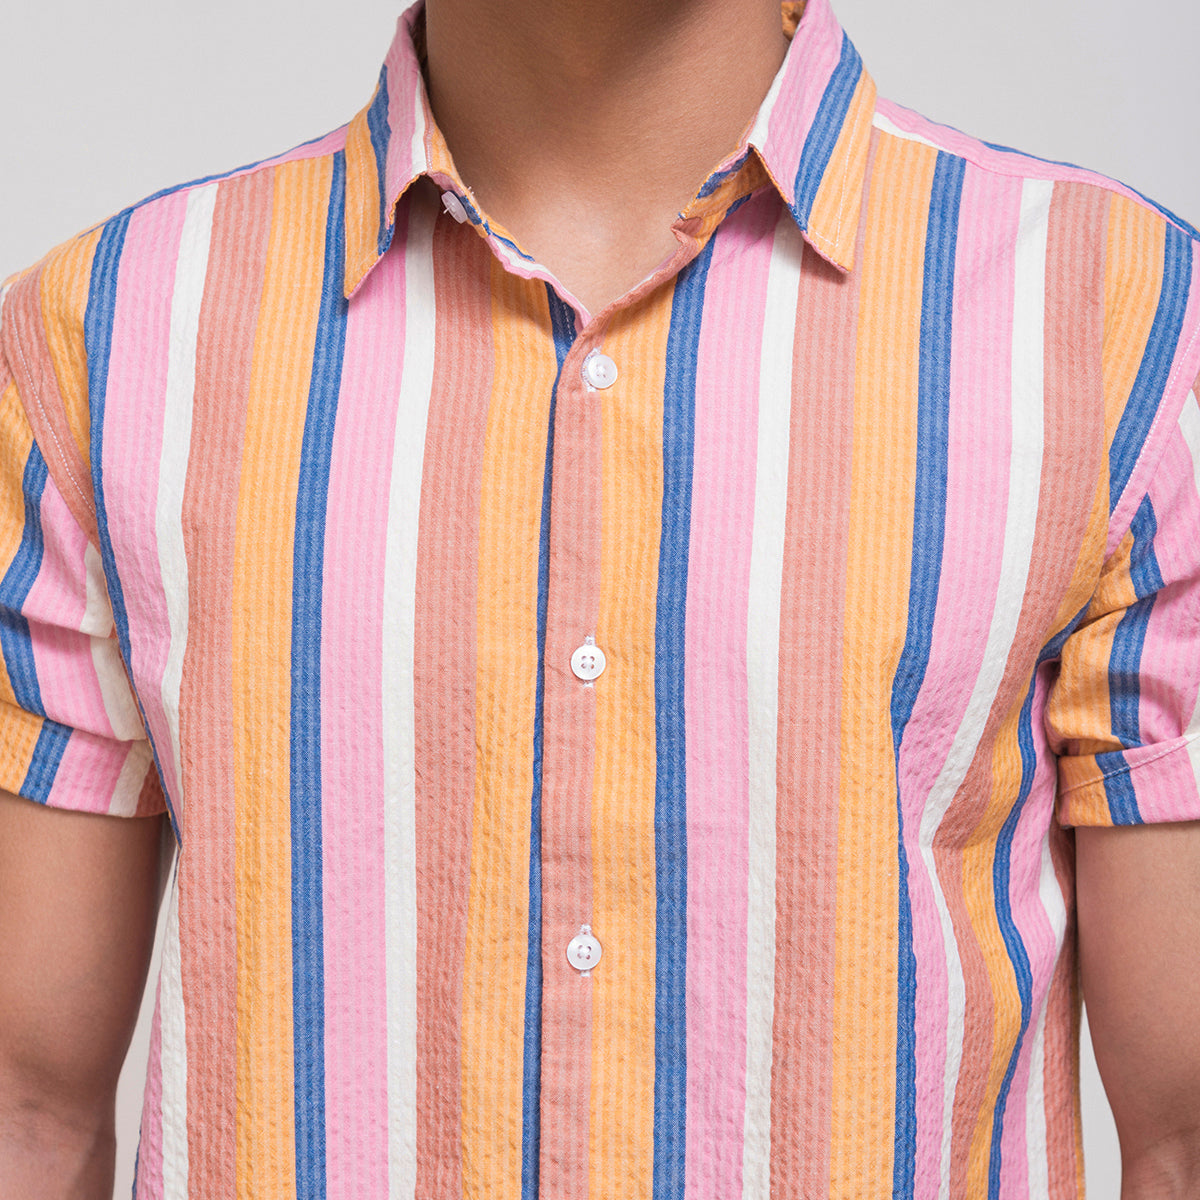 Prism pin striped shirt